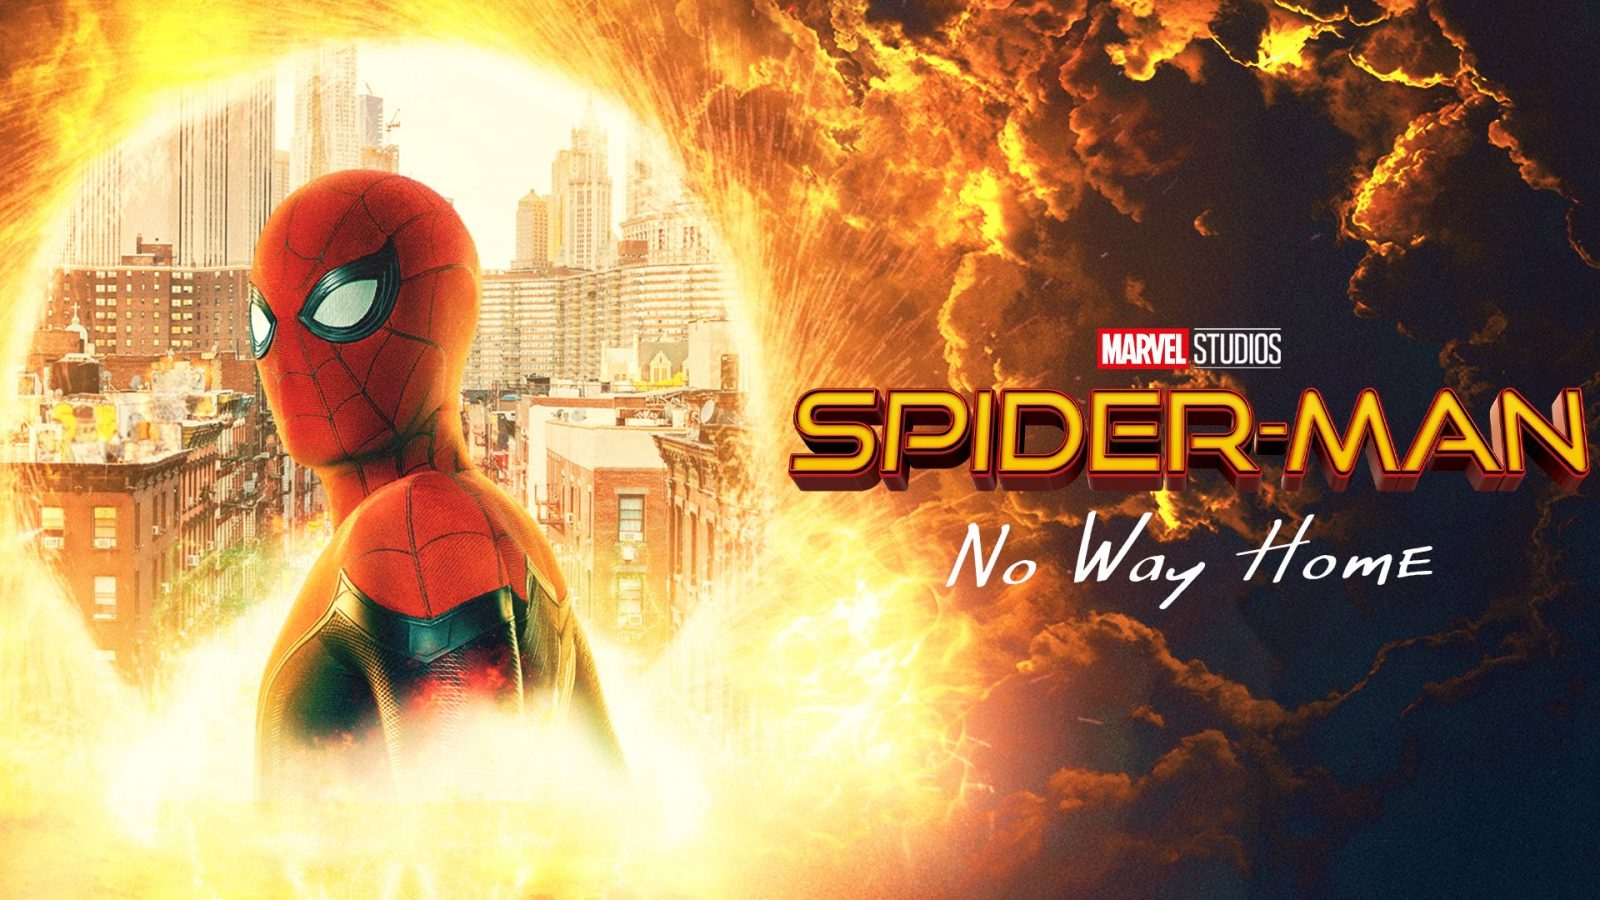 Spider-Man No Way Home Spoiler-Free Review